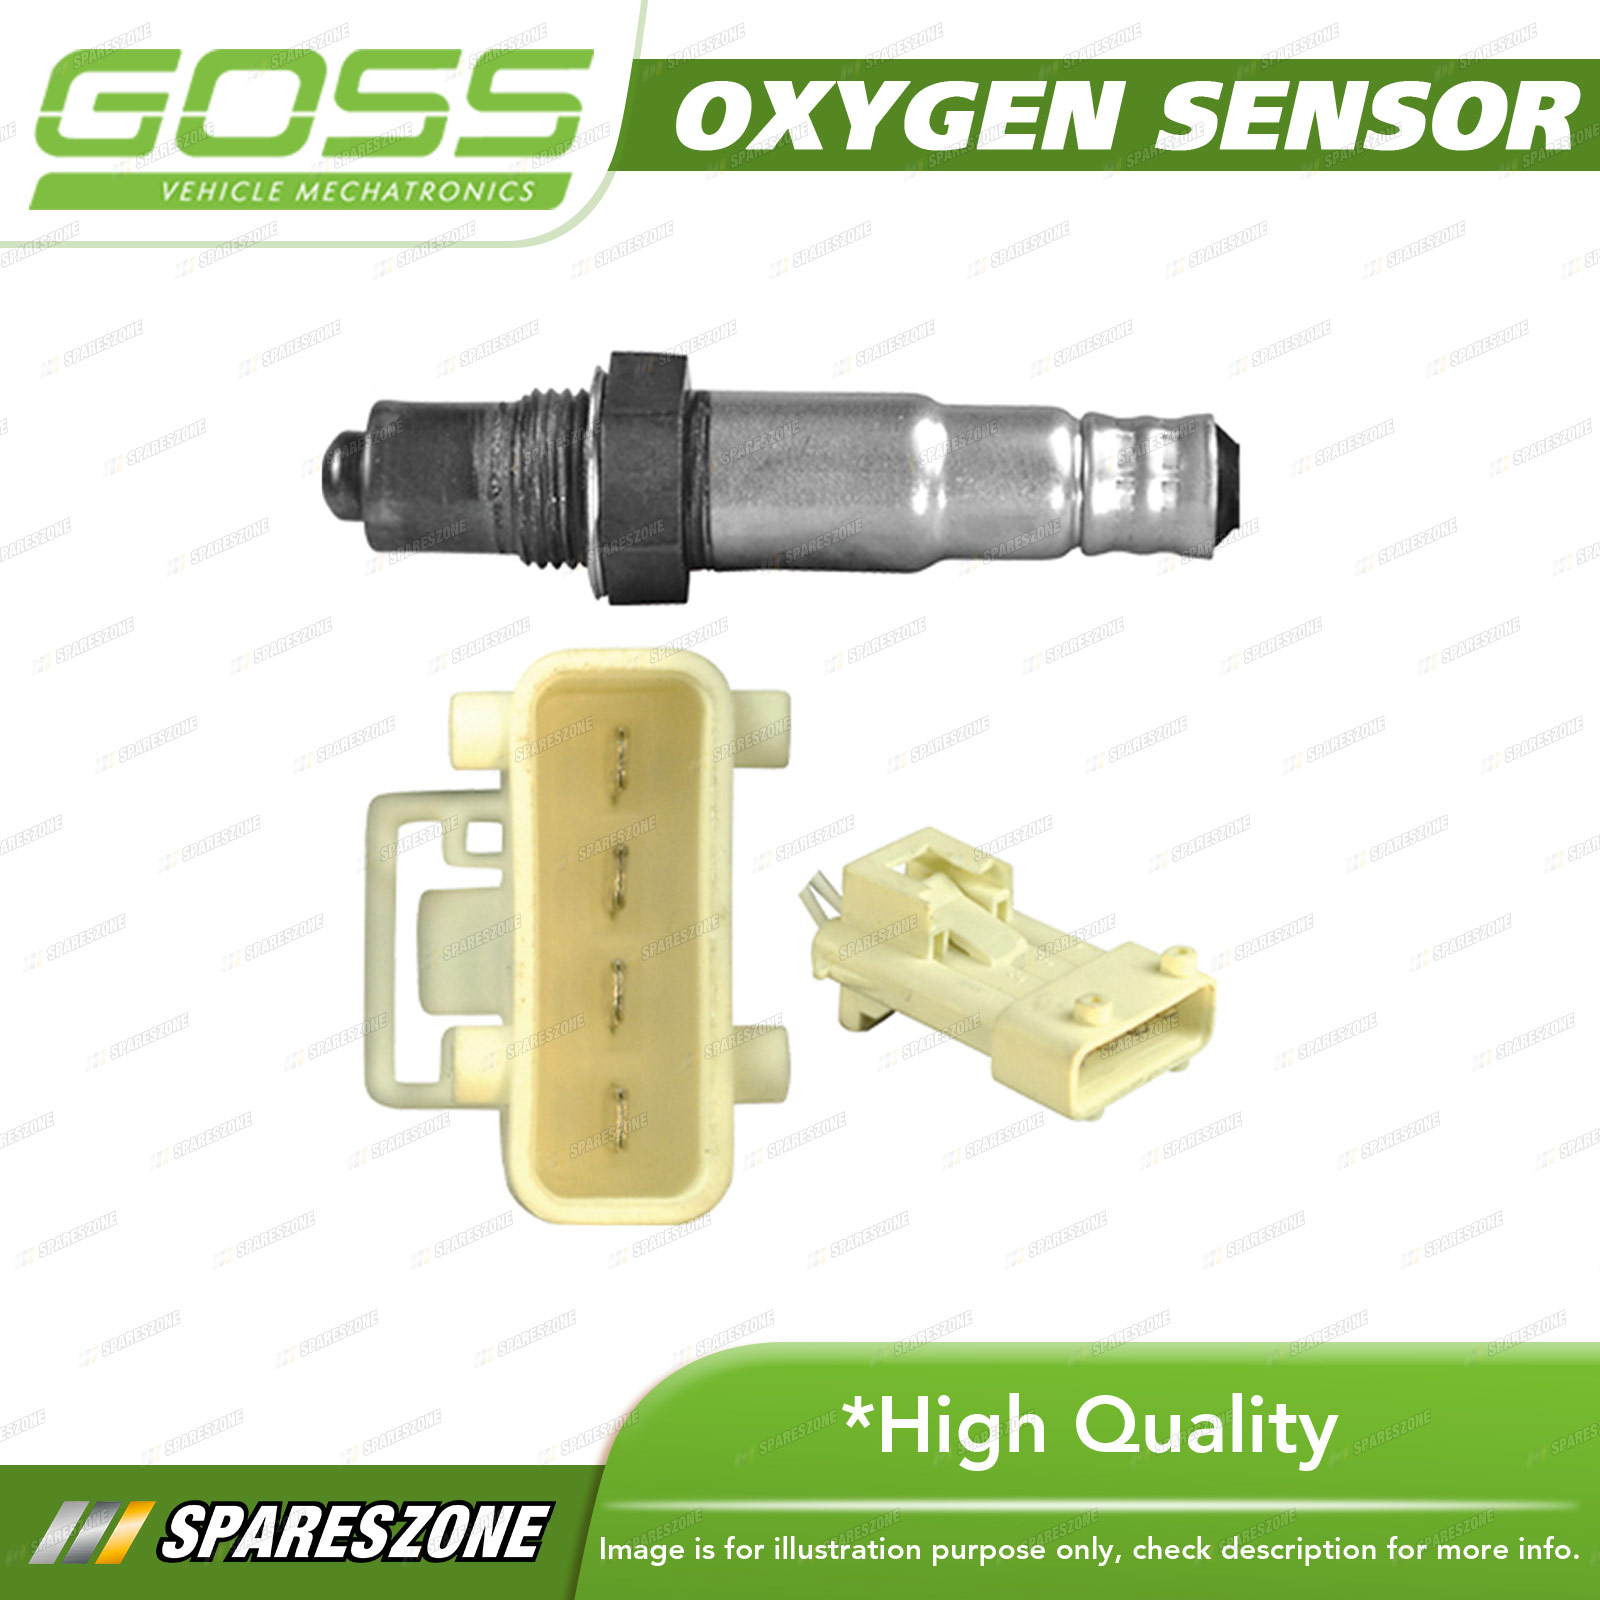 Goss Oxygen Sensor for Peugeot 206 3008 307 T5 308 CC T7